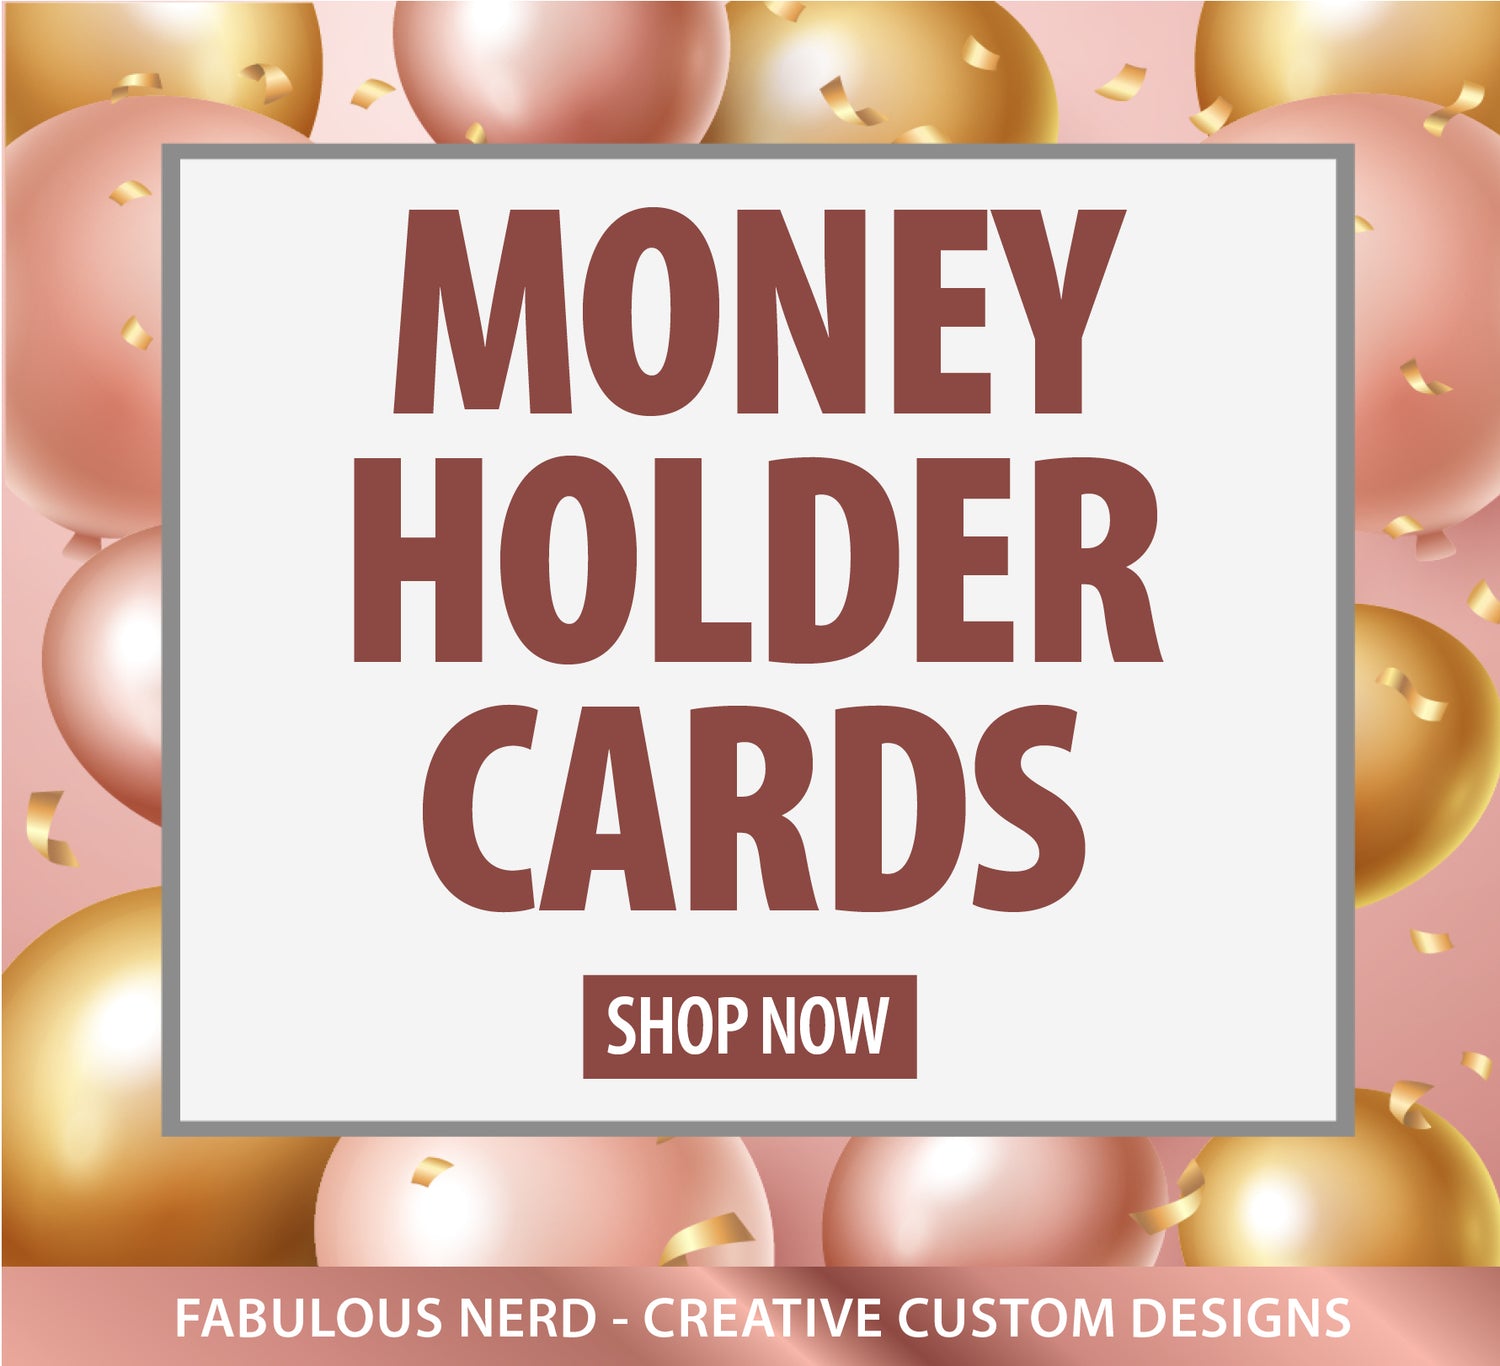 MONEY HOLDER CARDS